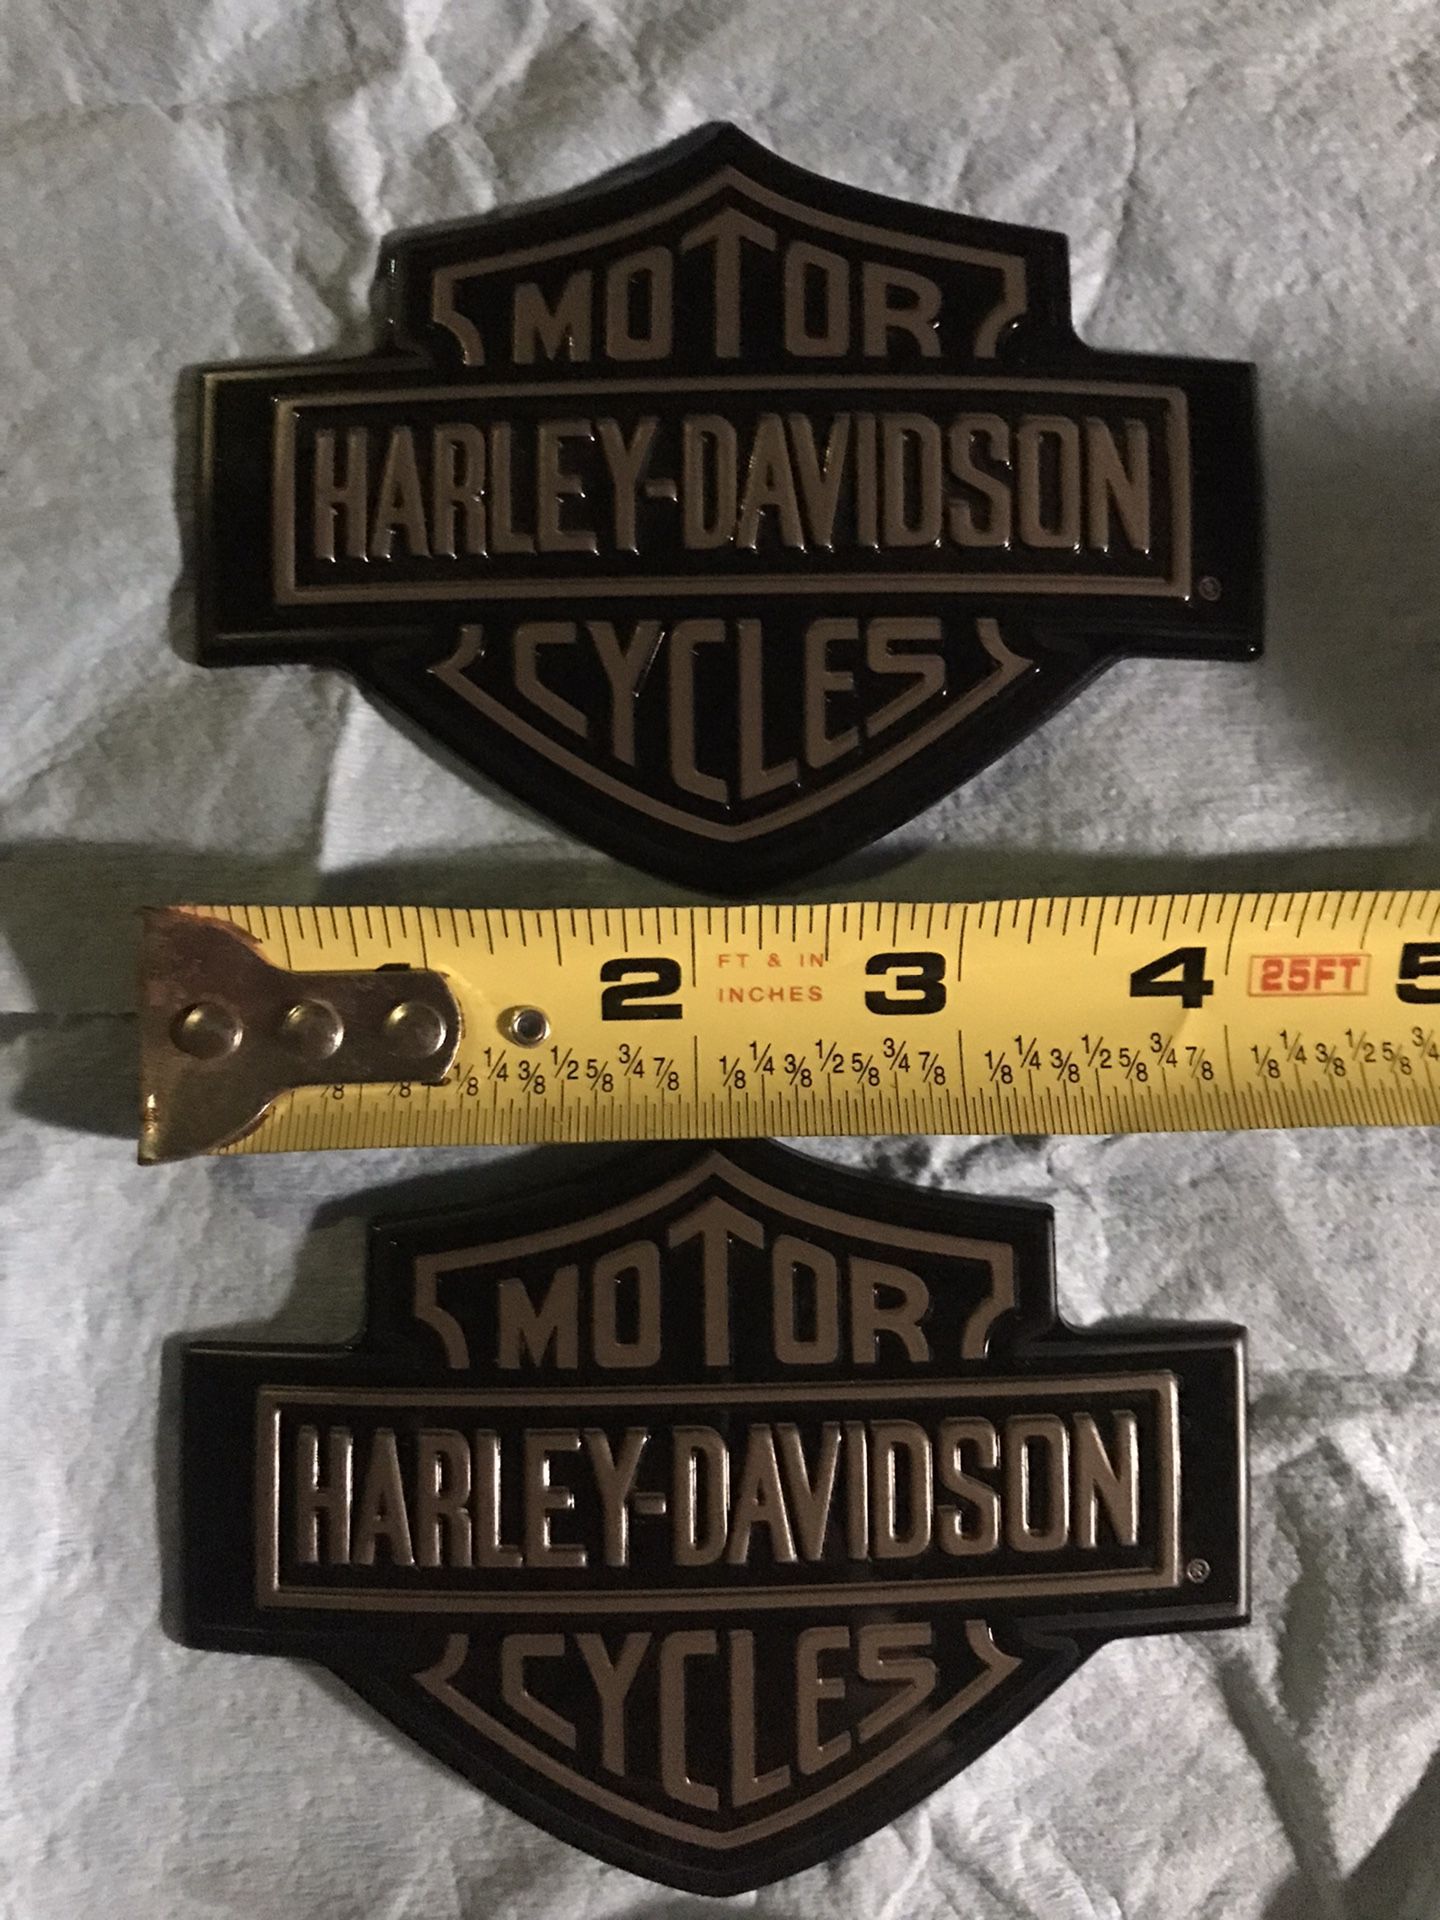 Harley Davidson Motorcycle Decal